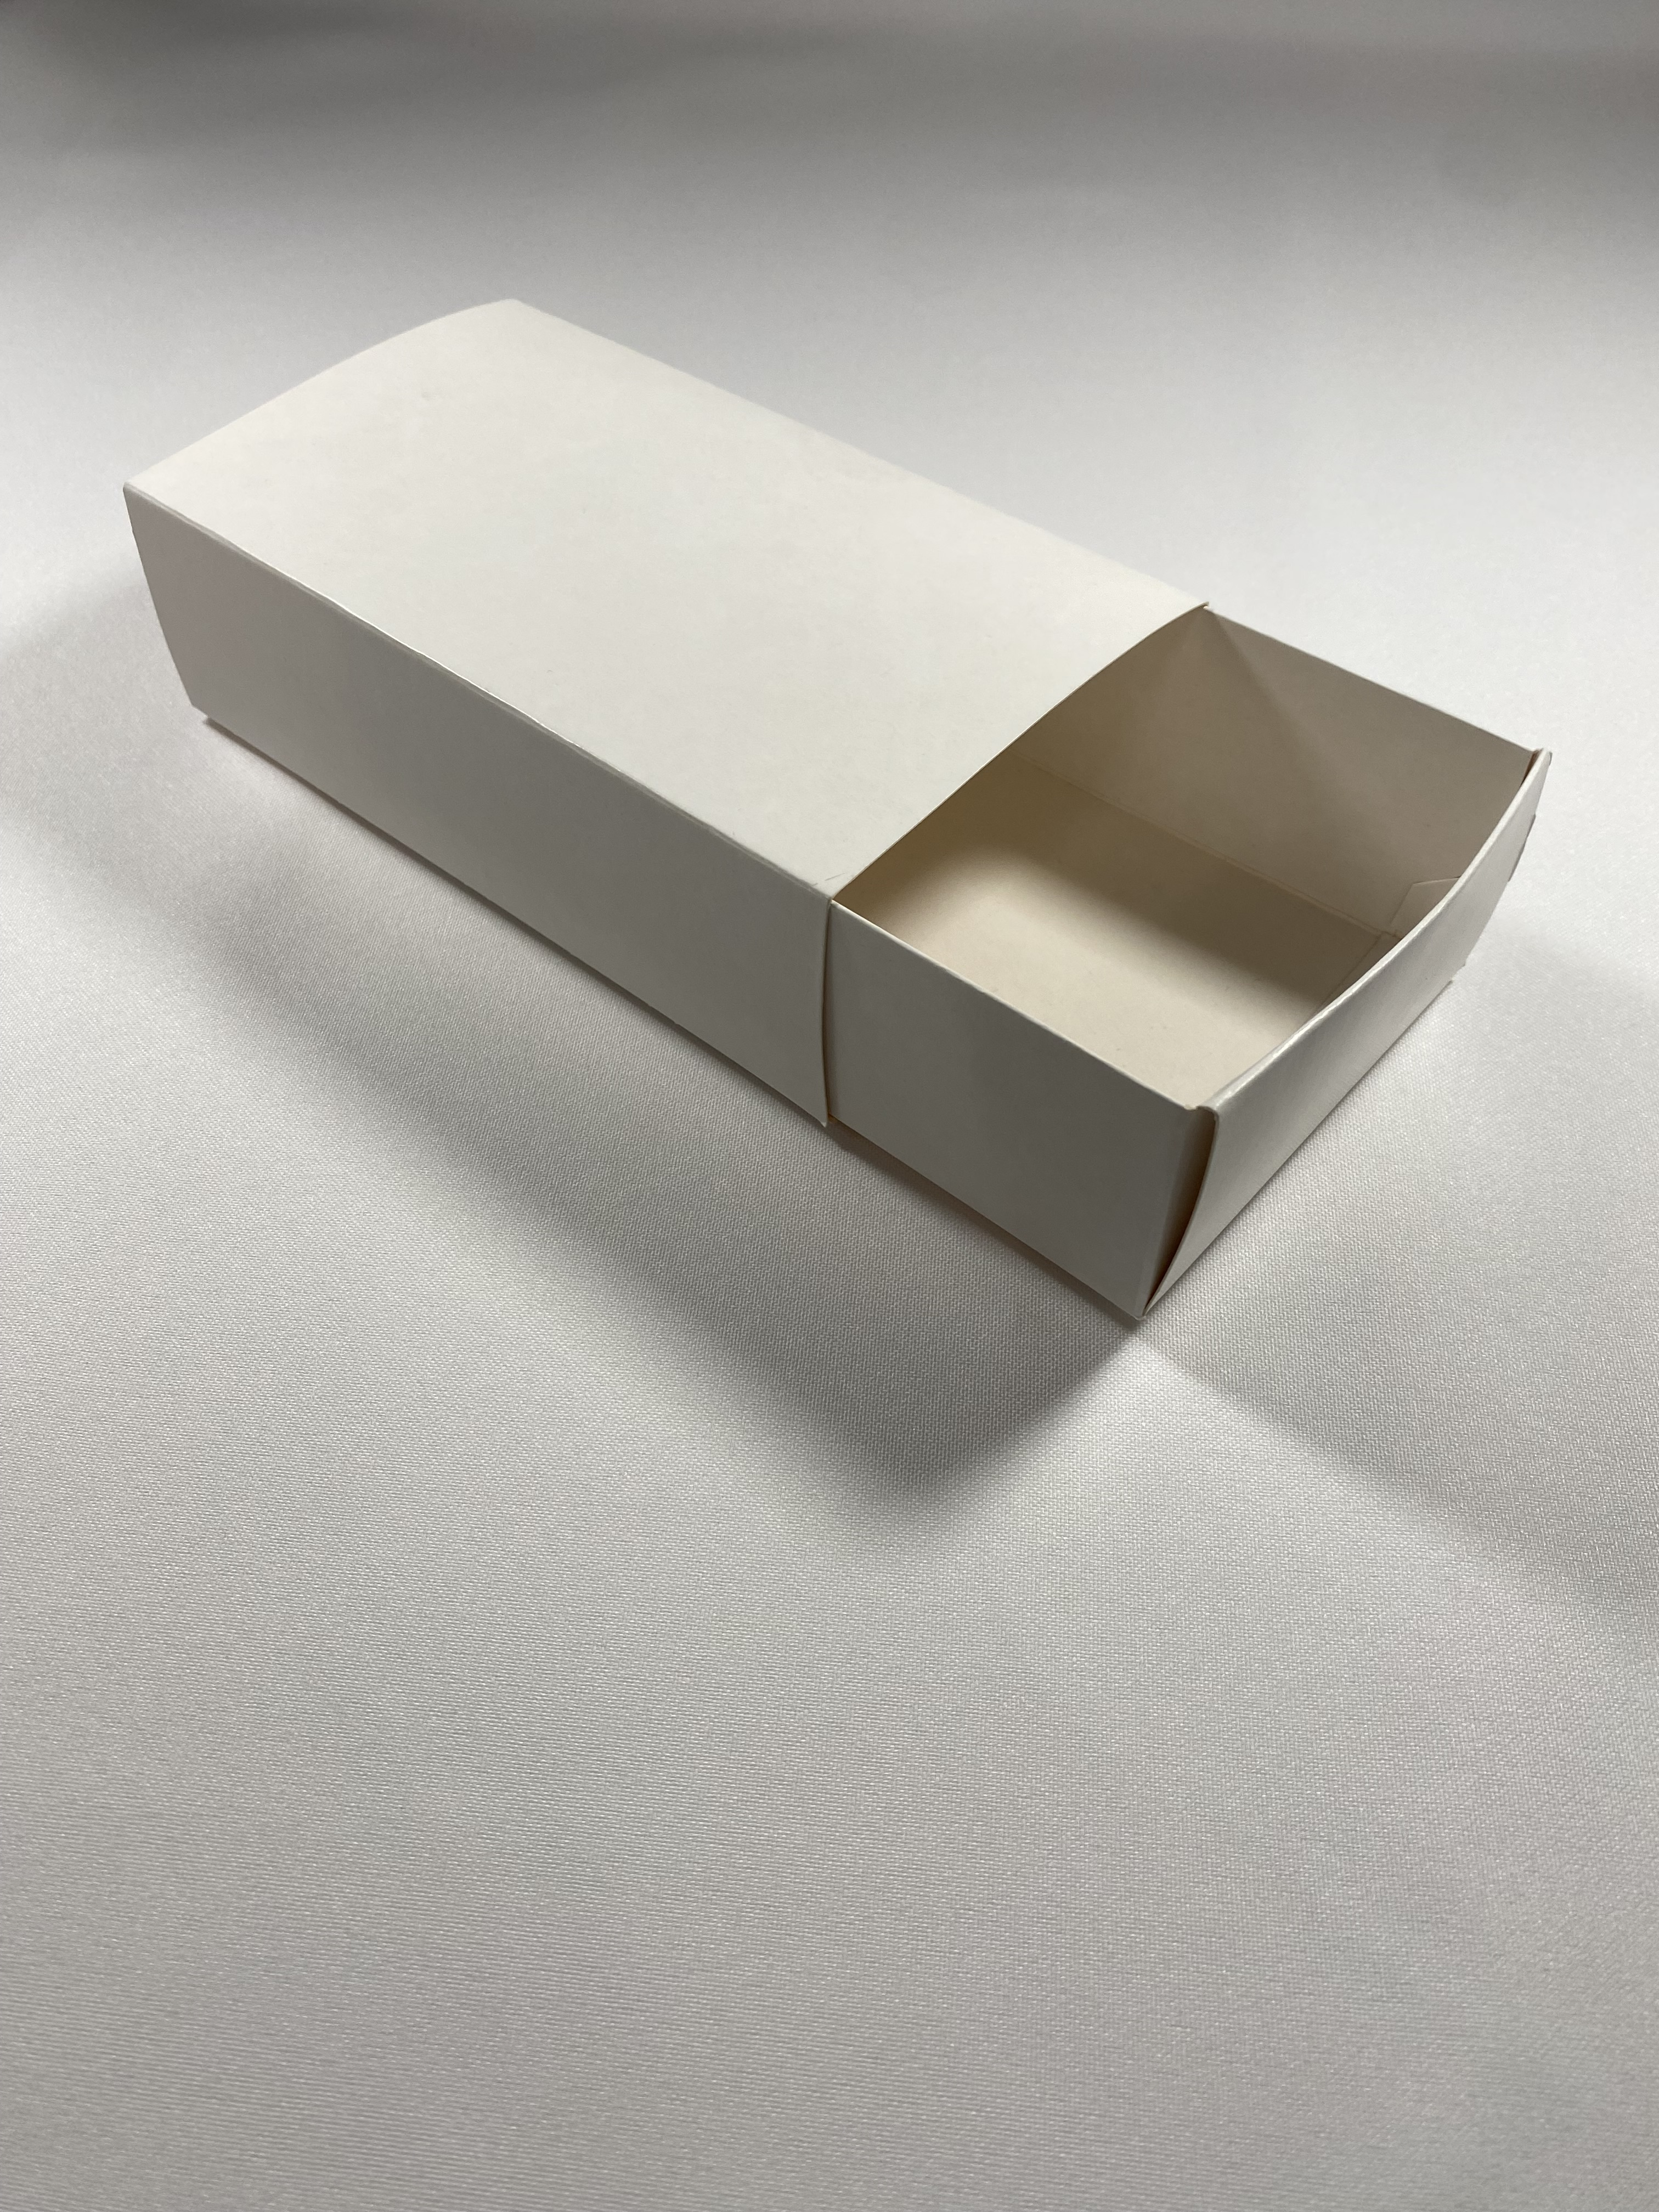 Obrázek k výrobku 19610 - Krabička na makrónky (16 x 9 x 4,5 cm) biela